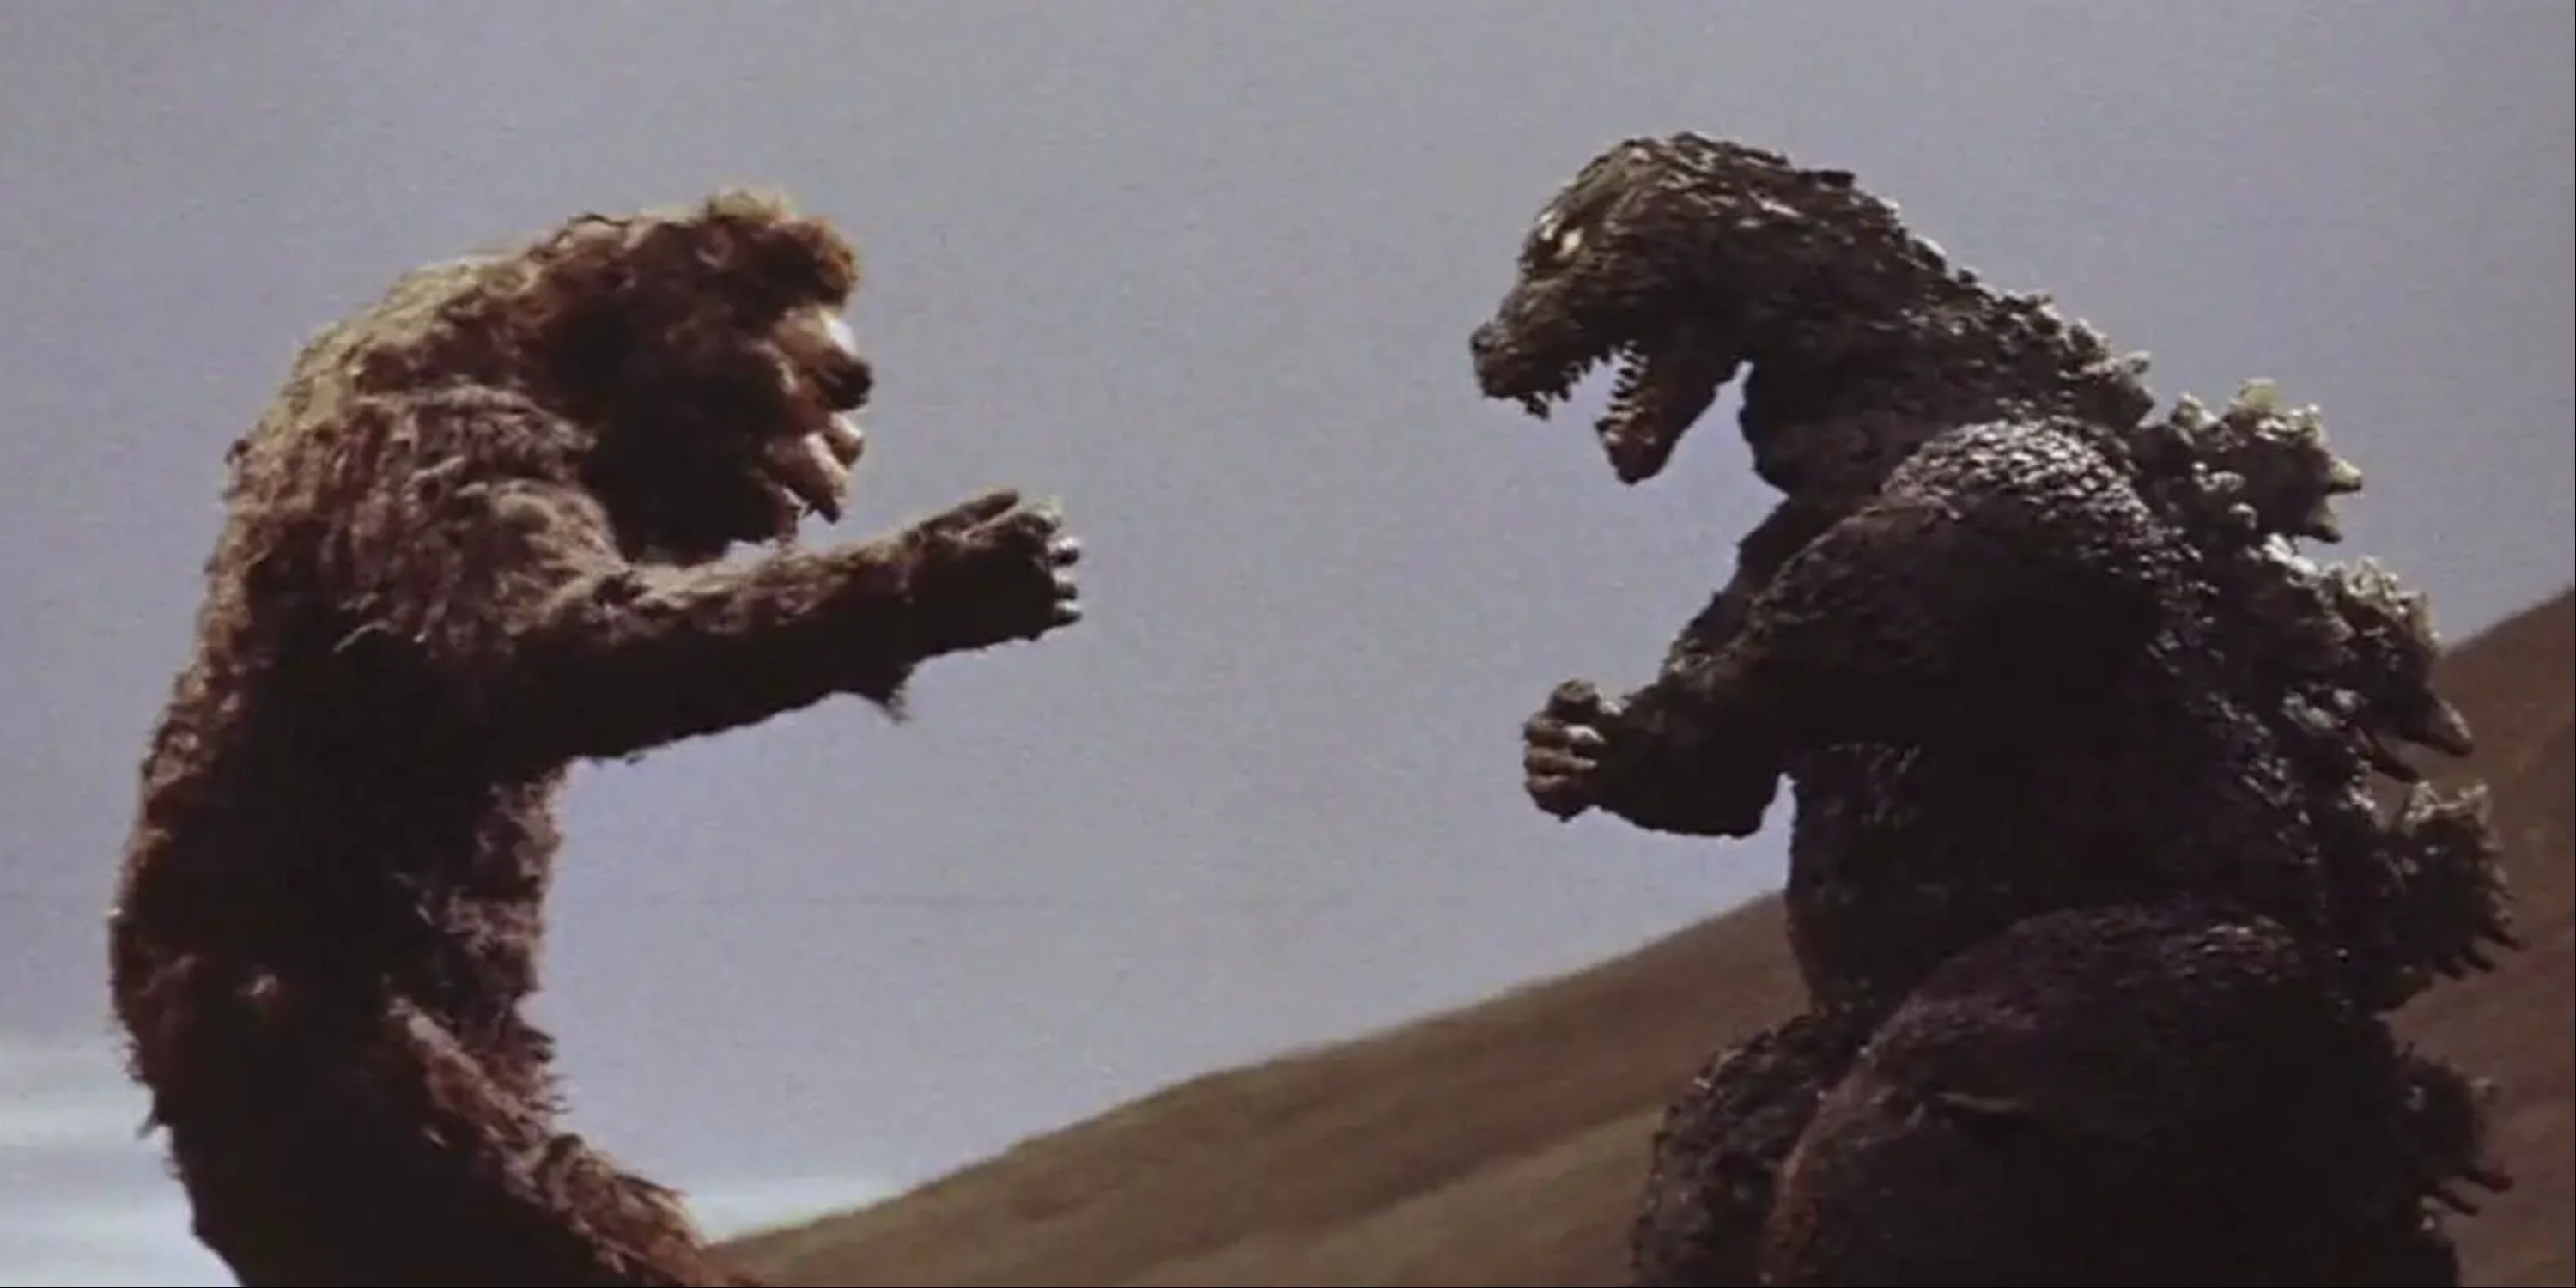 Kong and Godzilla square up